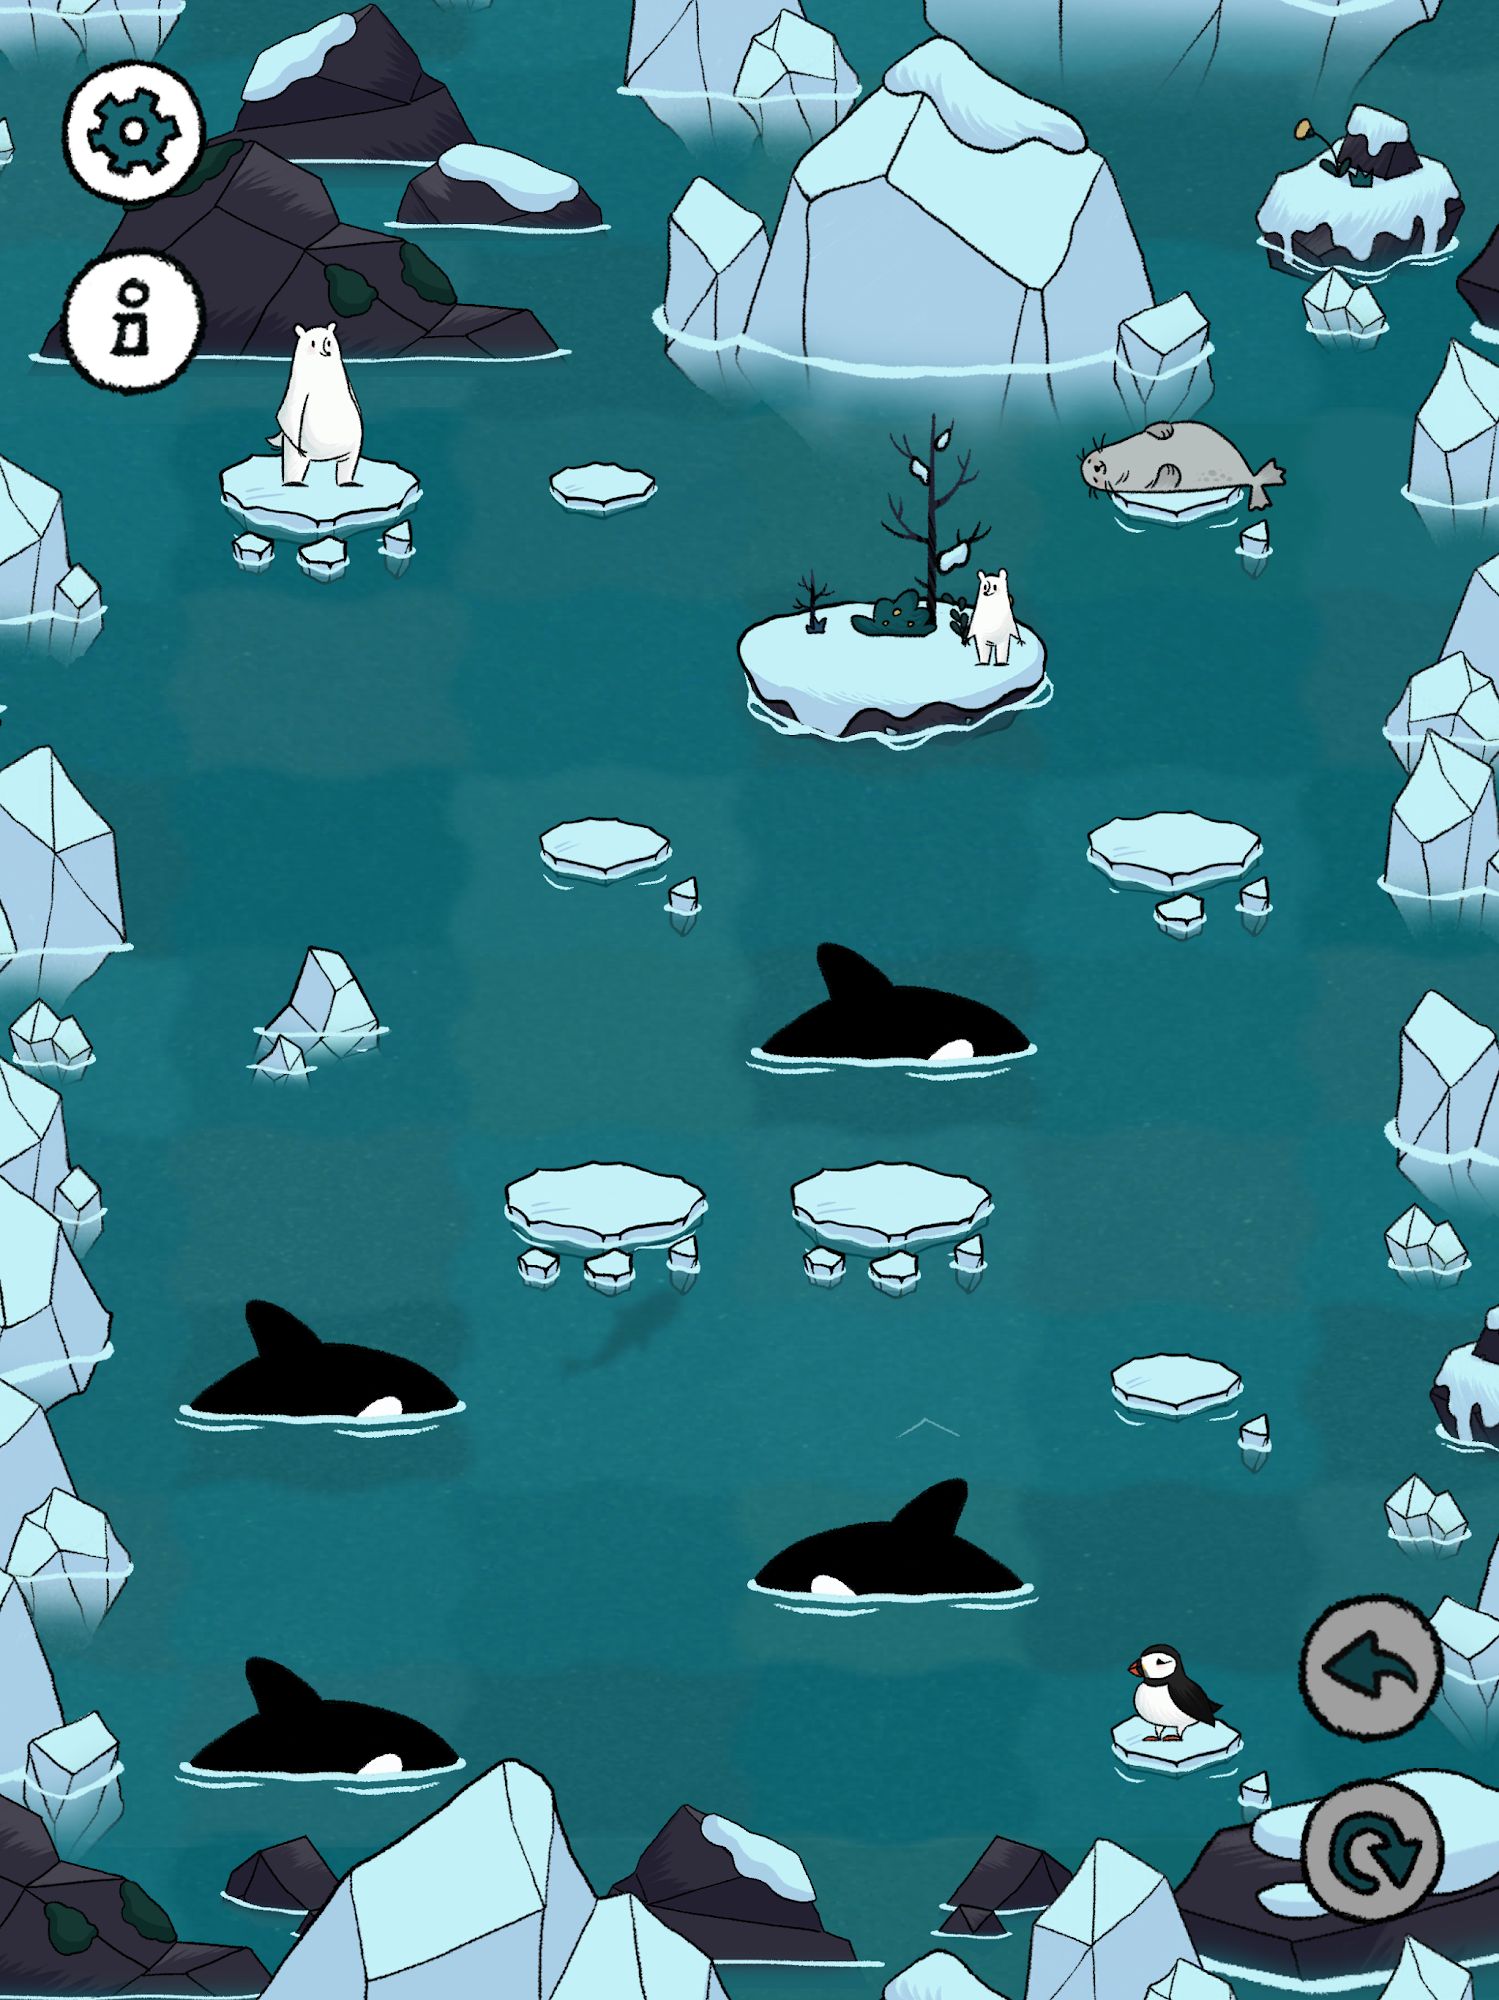 Arctictopia - Android game screenshots.